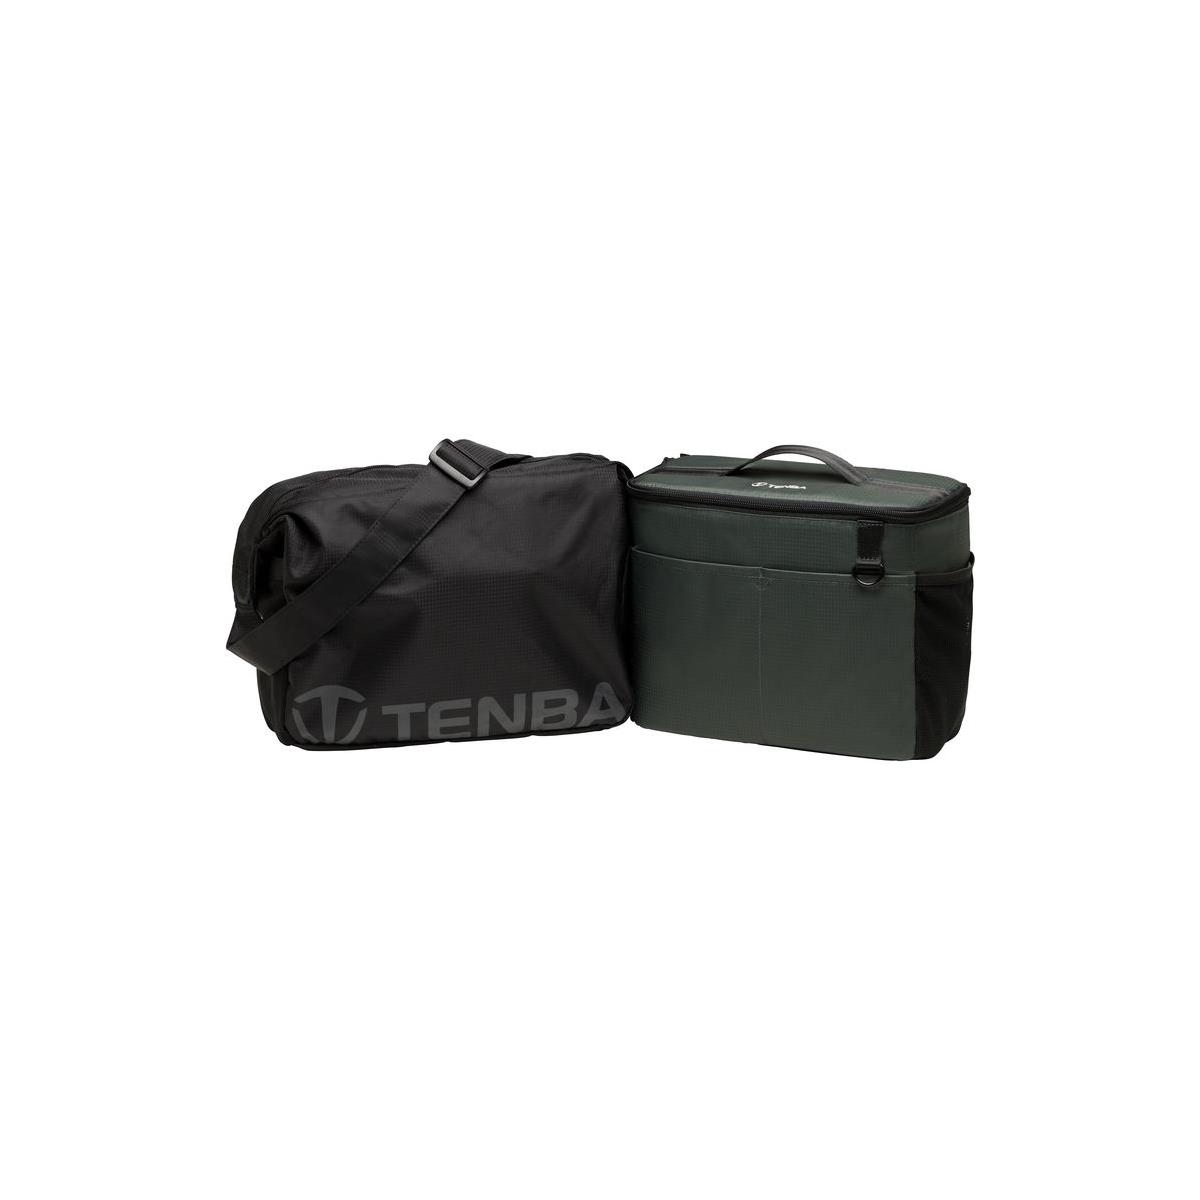 Tenba 636-283 BYOB/Packlite 10 Flatpack  Bundle with Insert and Packlite Bag (Black and Gray)